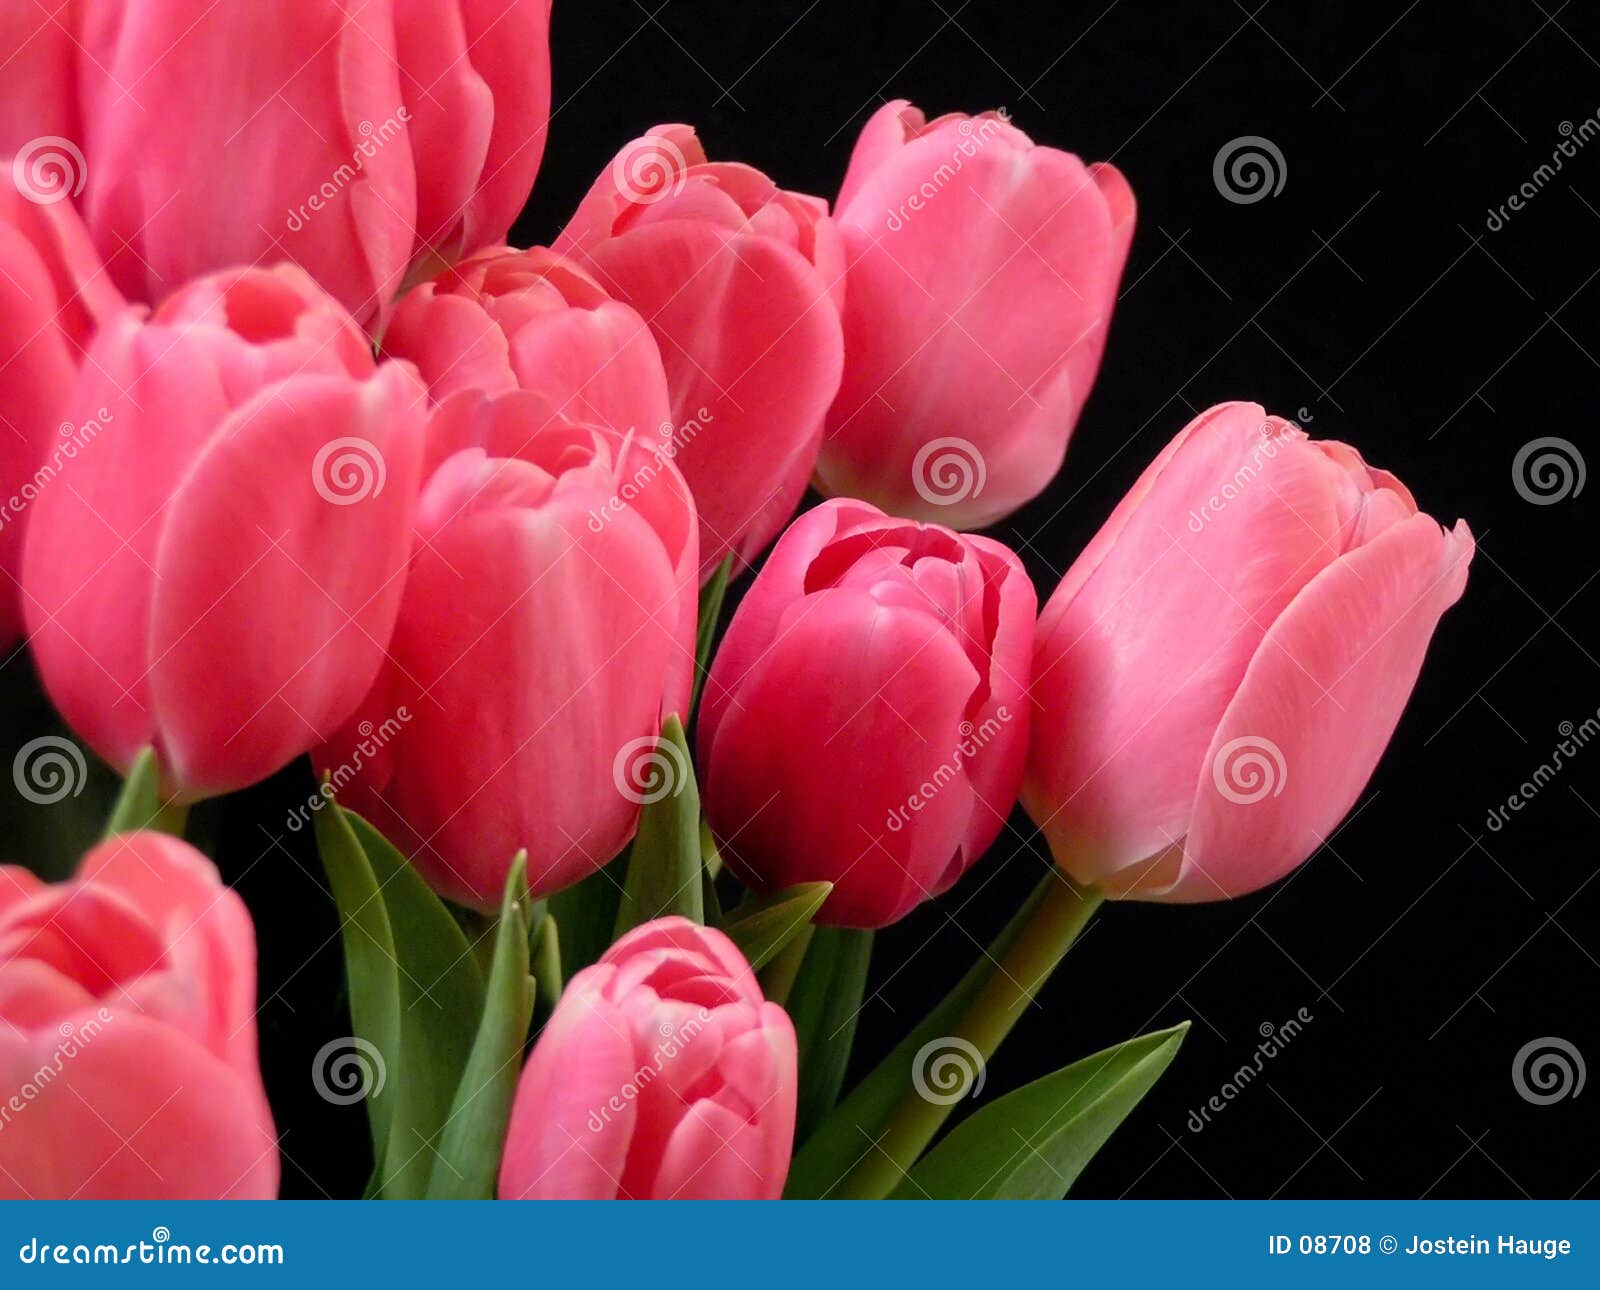 Valentine Tulips Royalty Free Stock Photos - Image: 87081300 x 1065